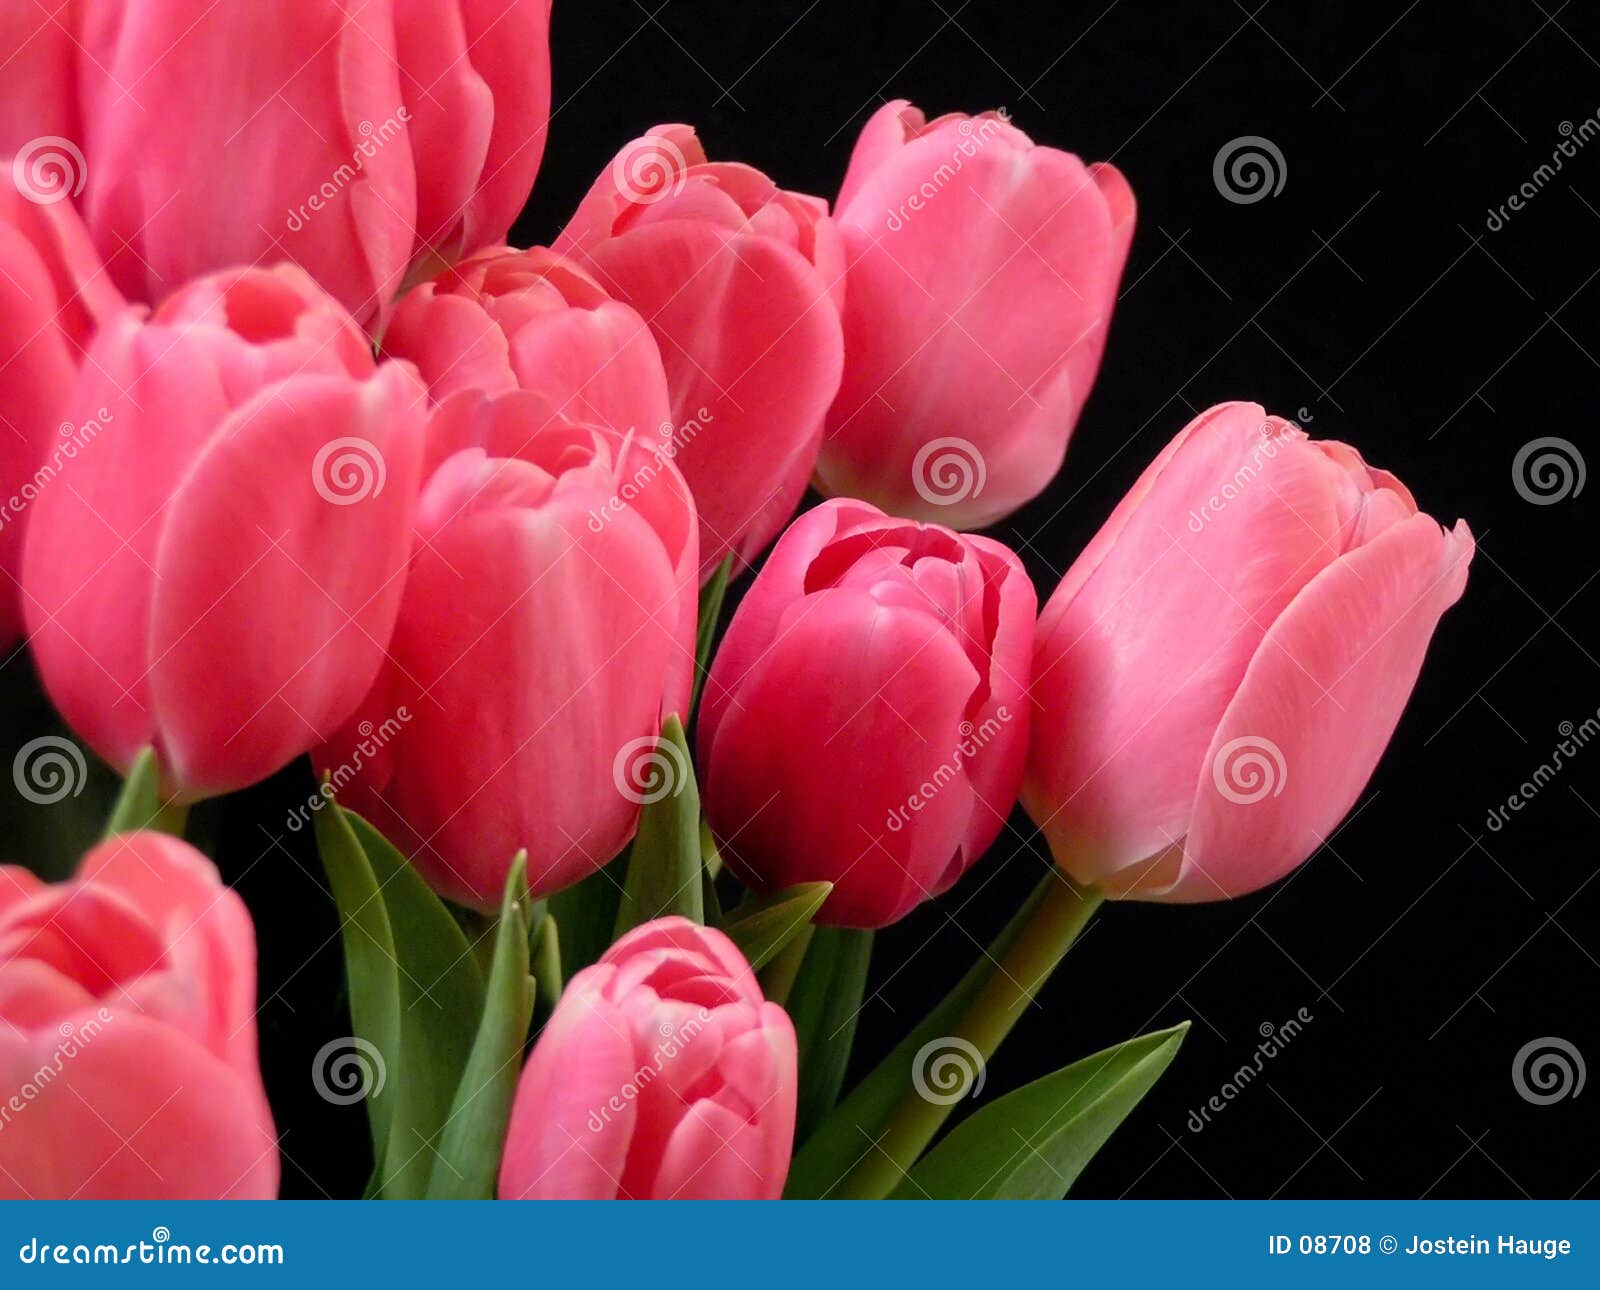 Valentine Tulips Royalty Free Stock Photos - Image: 87081300 x 1065